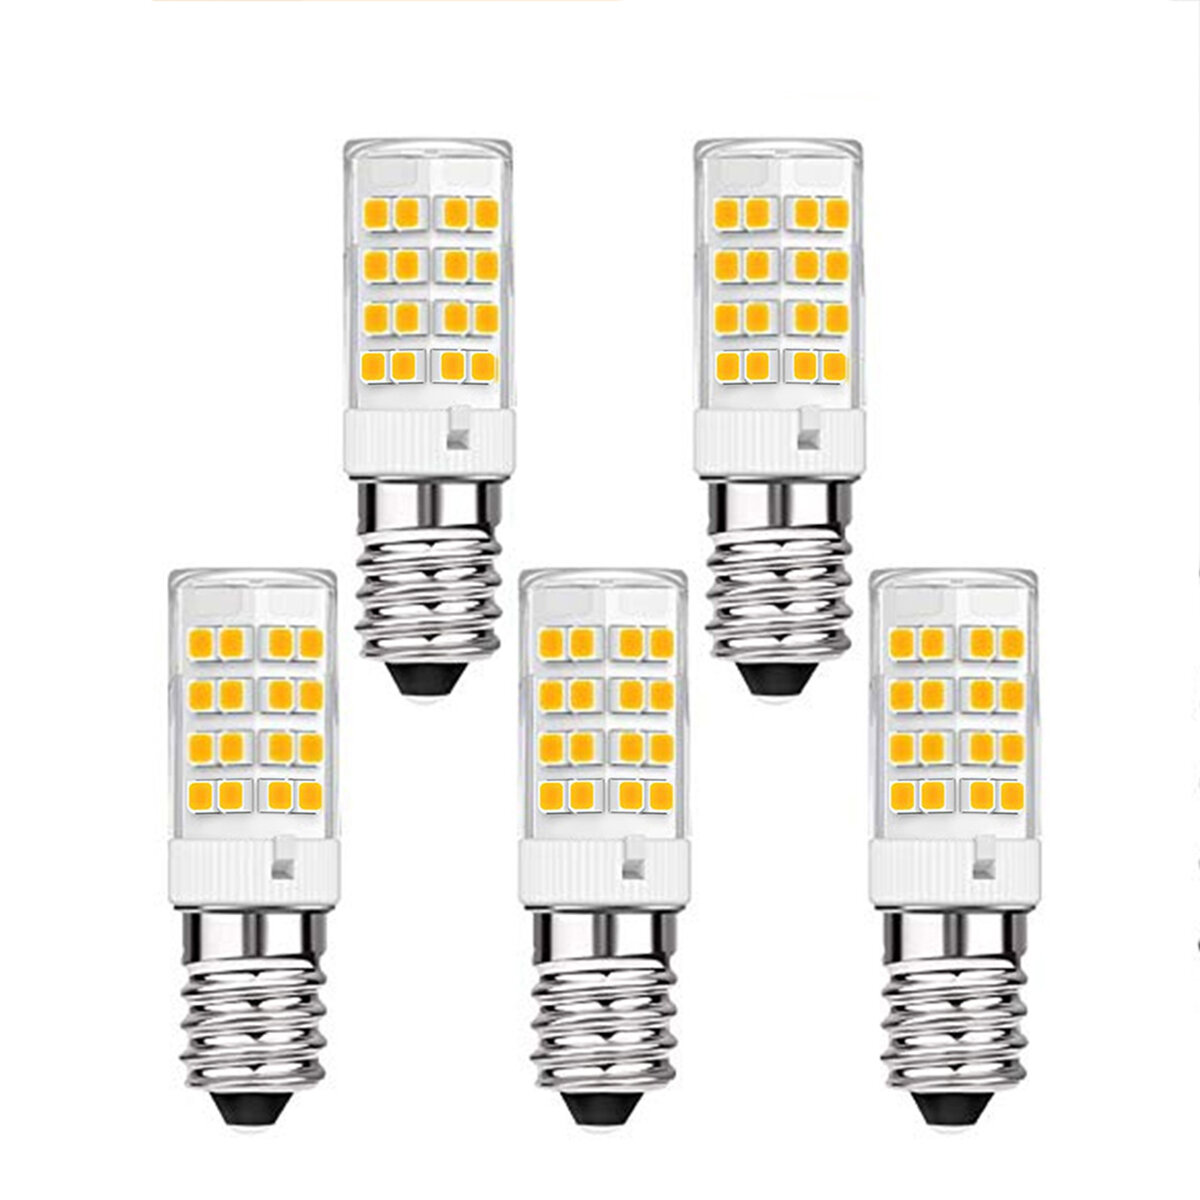 

5 Pack E14 LED Bulb 5W 450lm Warm White 3000K Replace for 40W Halogen Incandescent Bulb 220-240V 360 ° Angle 33 SMD LEDs